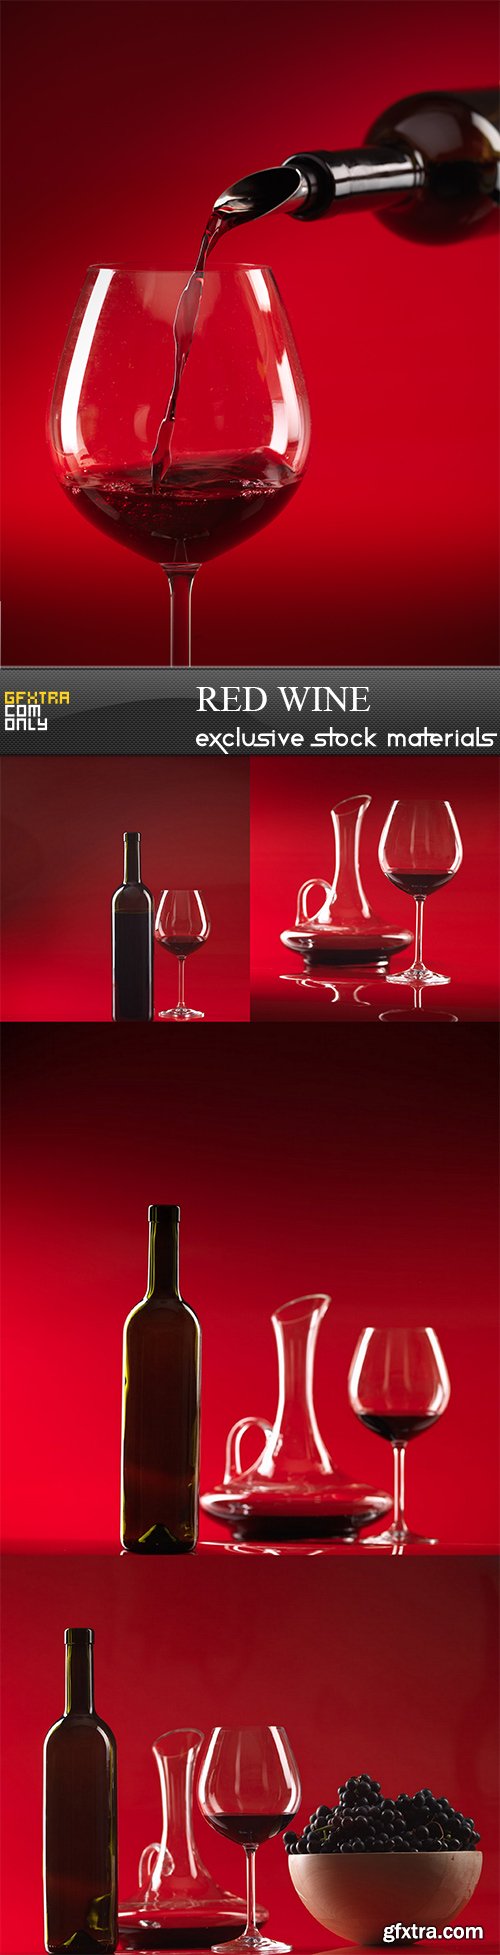 Red Wine - 5 UHQ JPEG